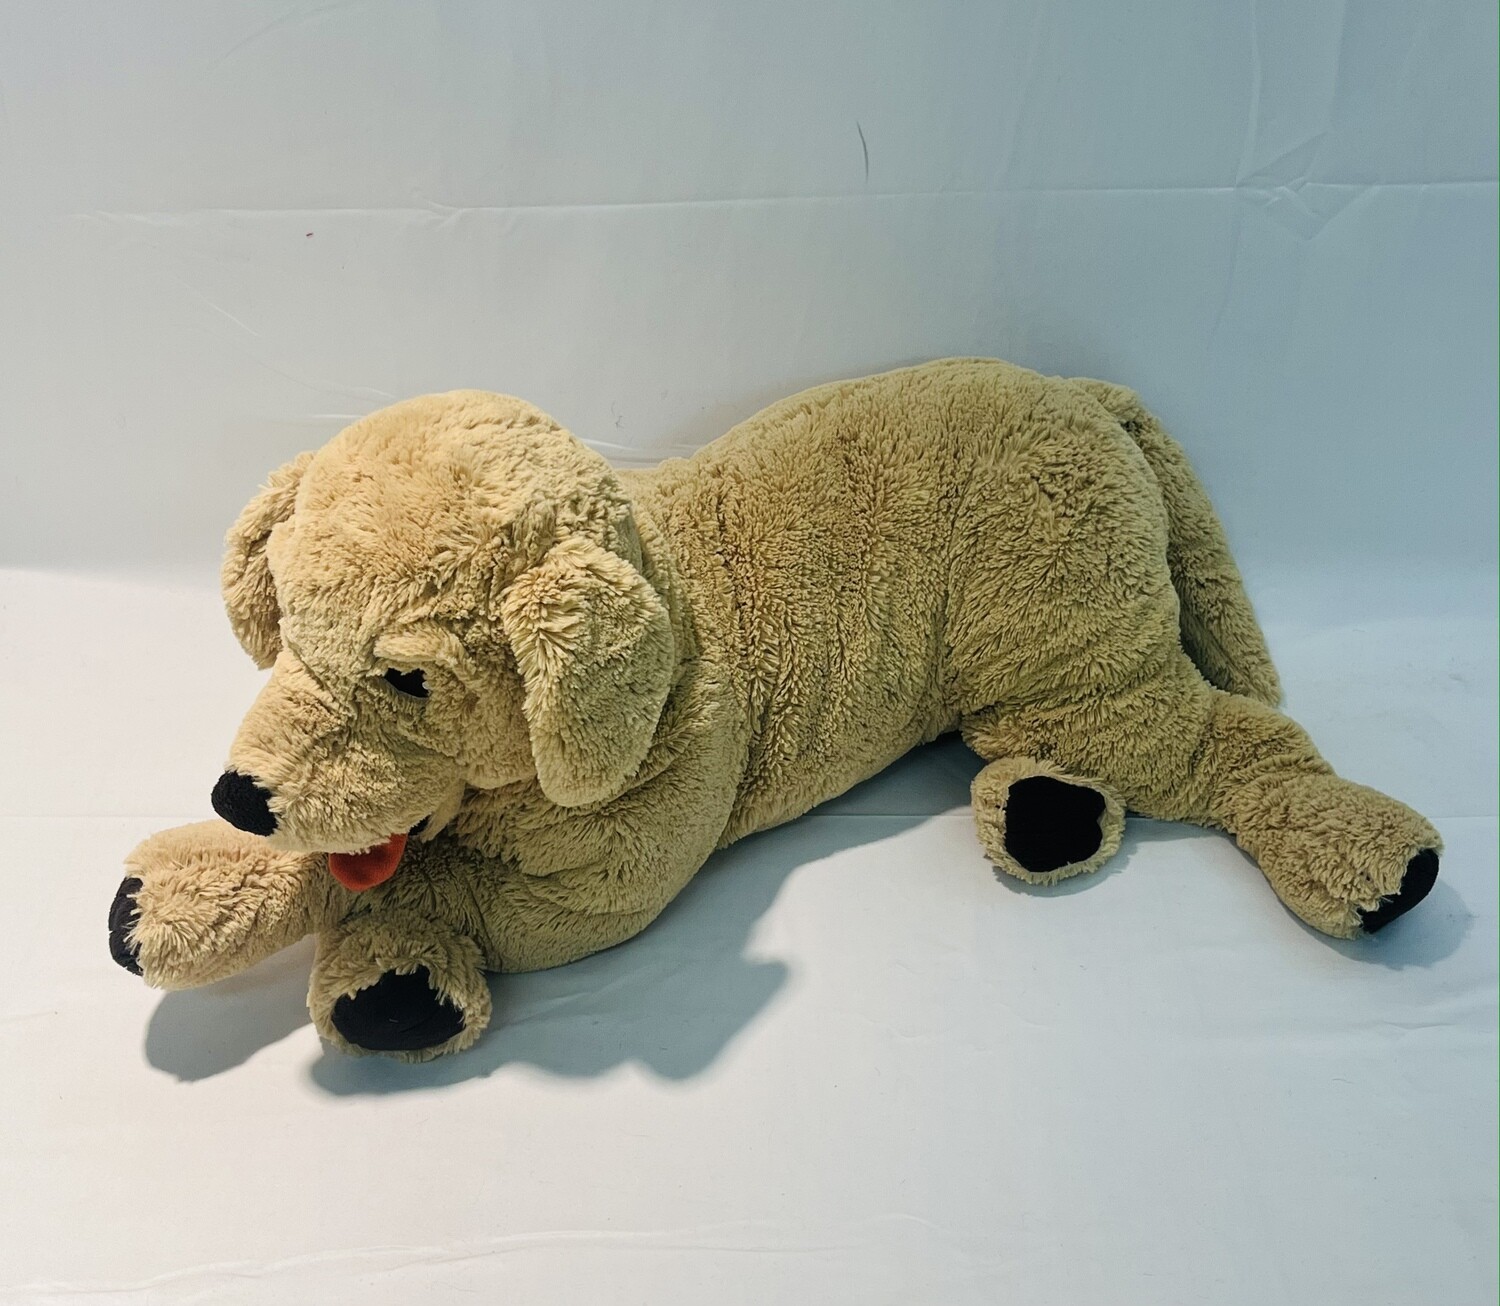 XXL Hund Ikea liegend 88 cm 0,6 kg Sammlerstück ( beliebt )